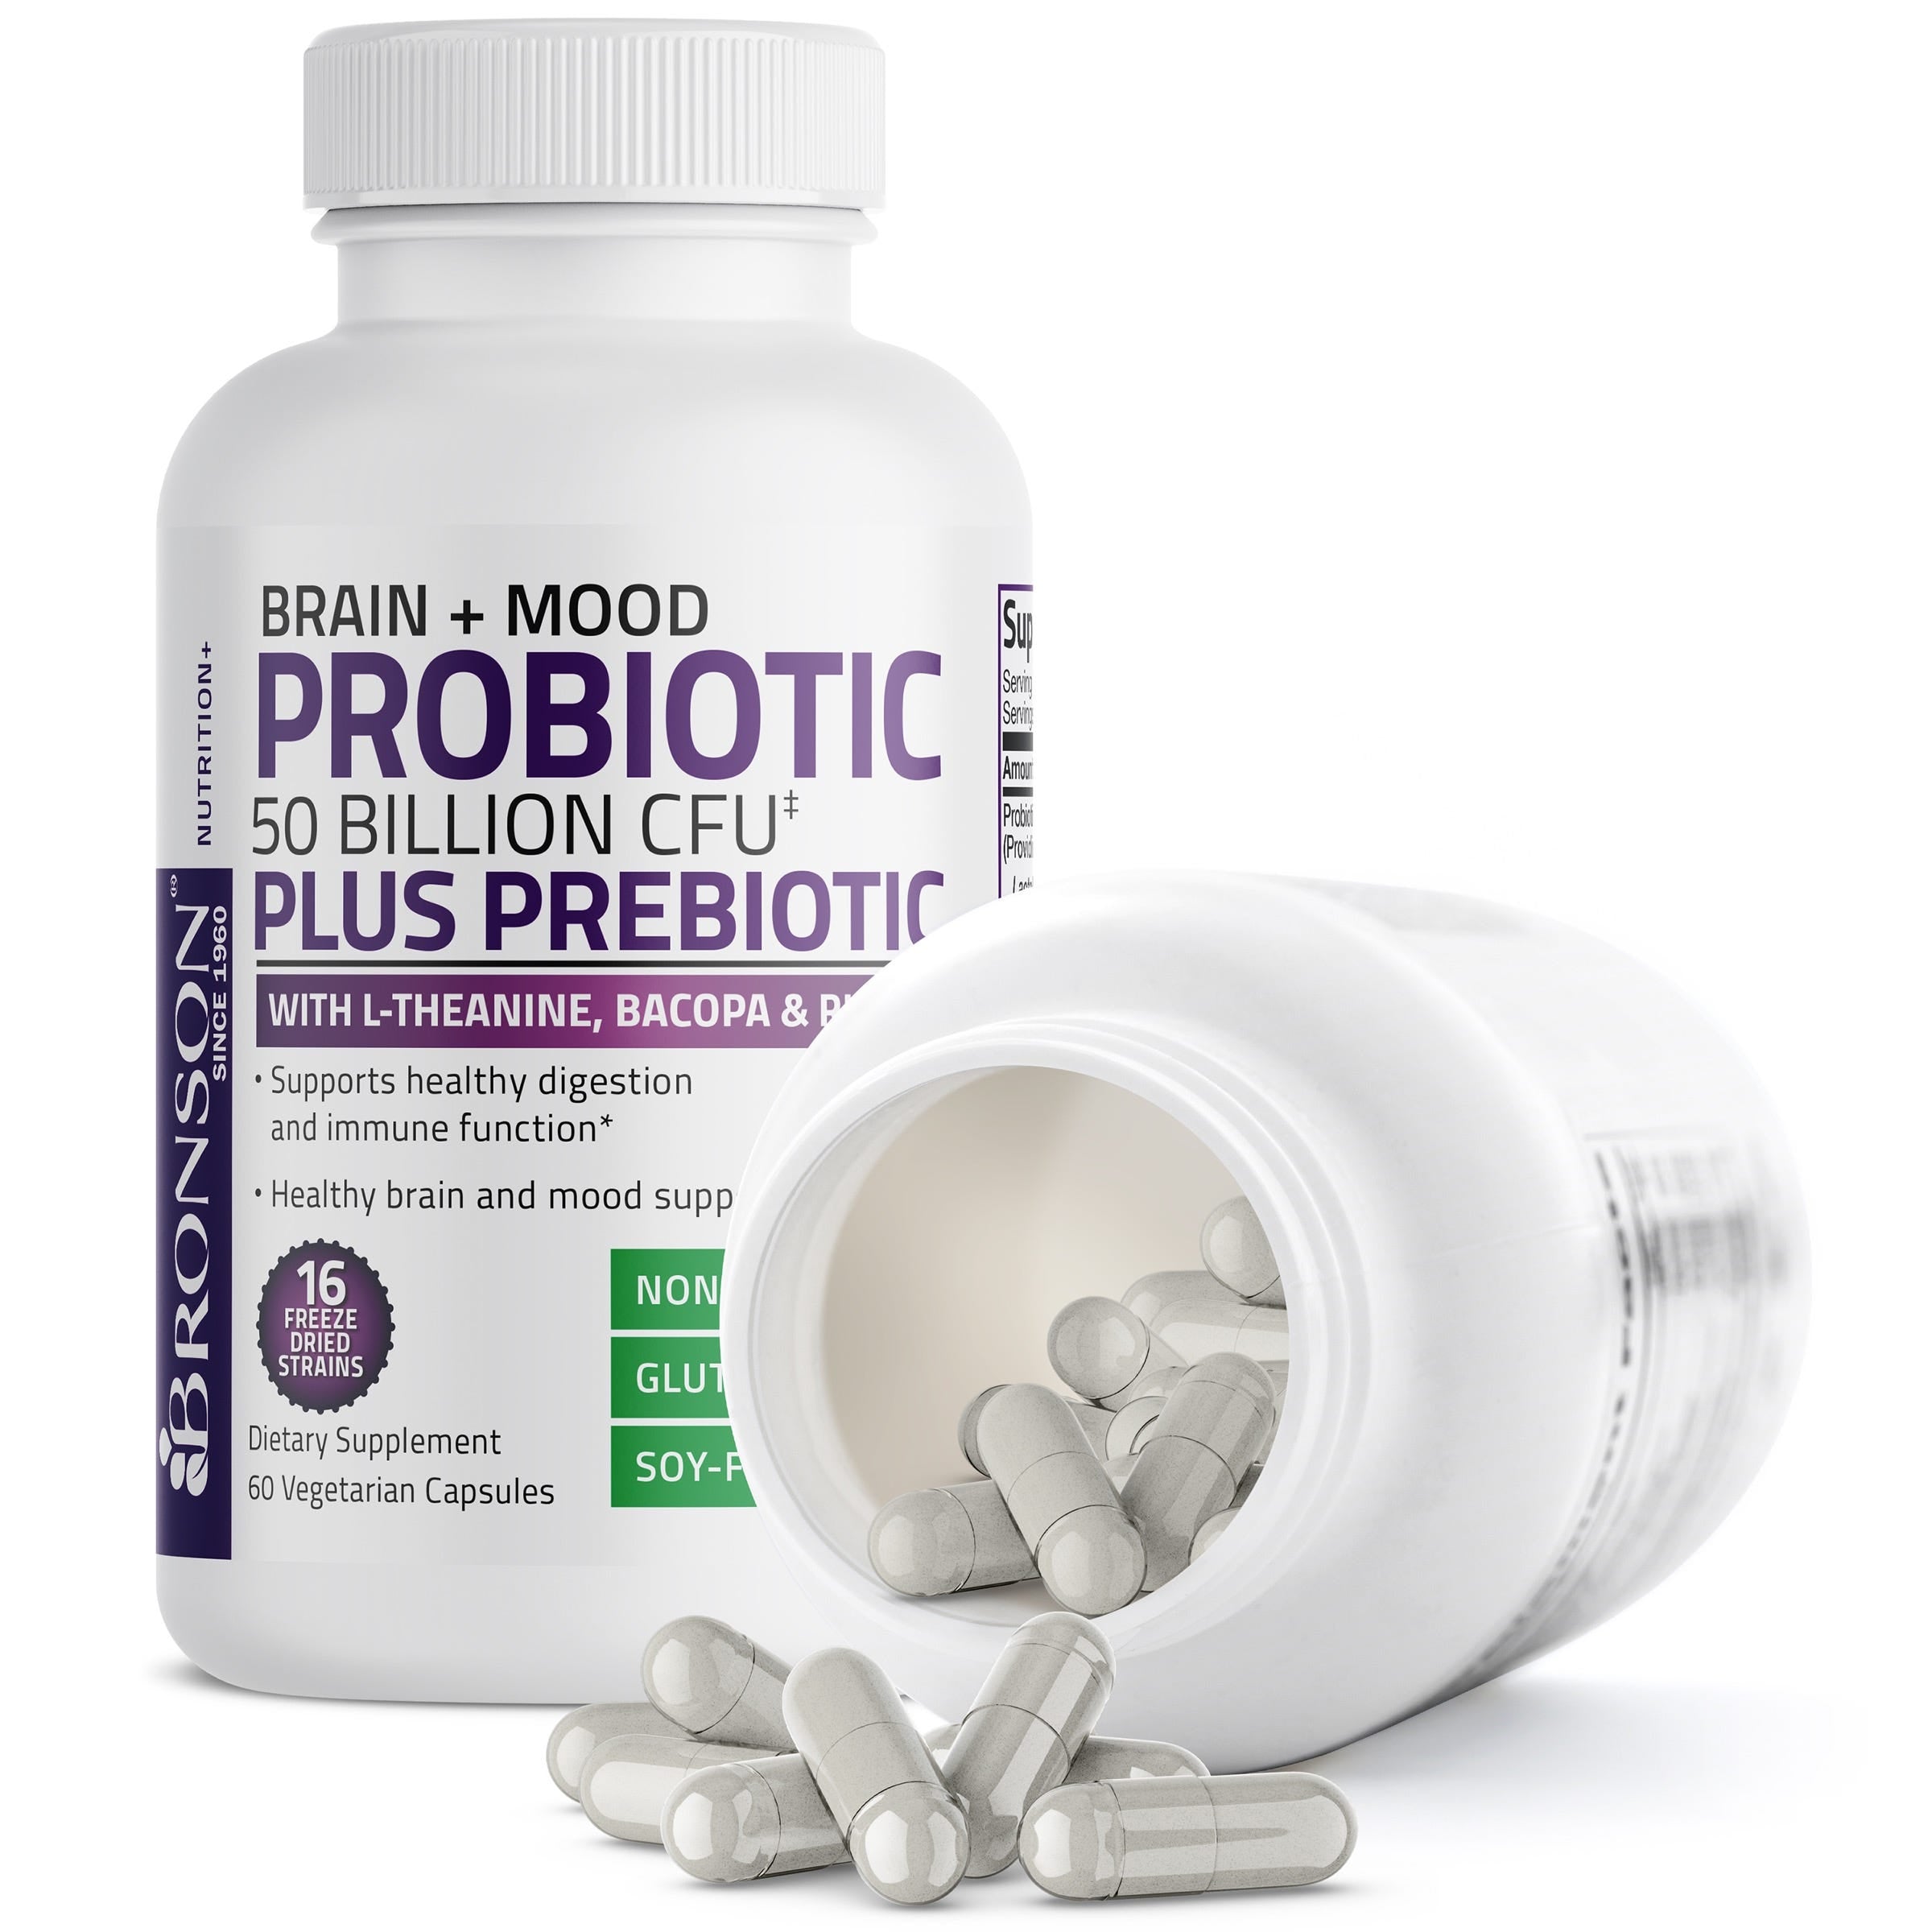 Probiotic Plus Prebiotic with L-Theanine, Bacopa & Rhodiola - 50 Billion CFU - 60 Vegetarian Capsules view 6 of 7